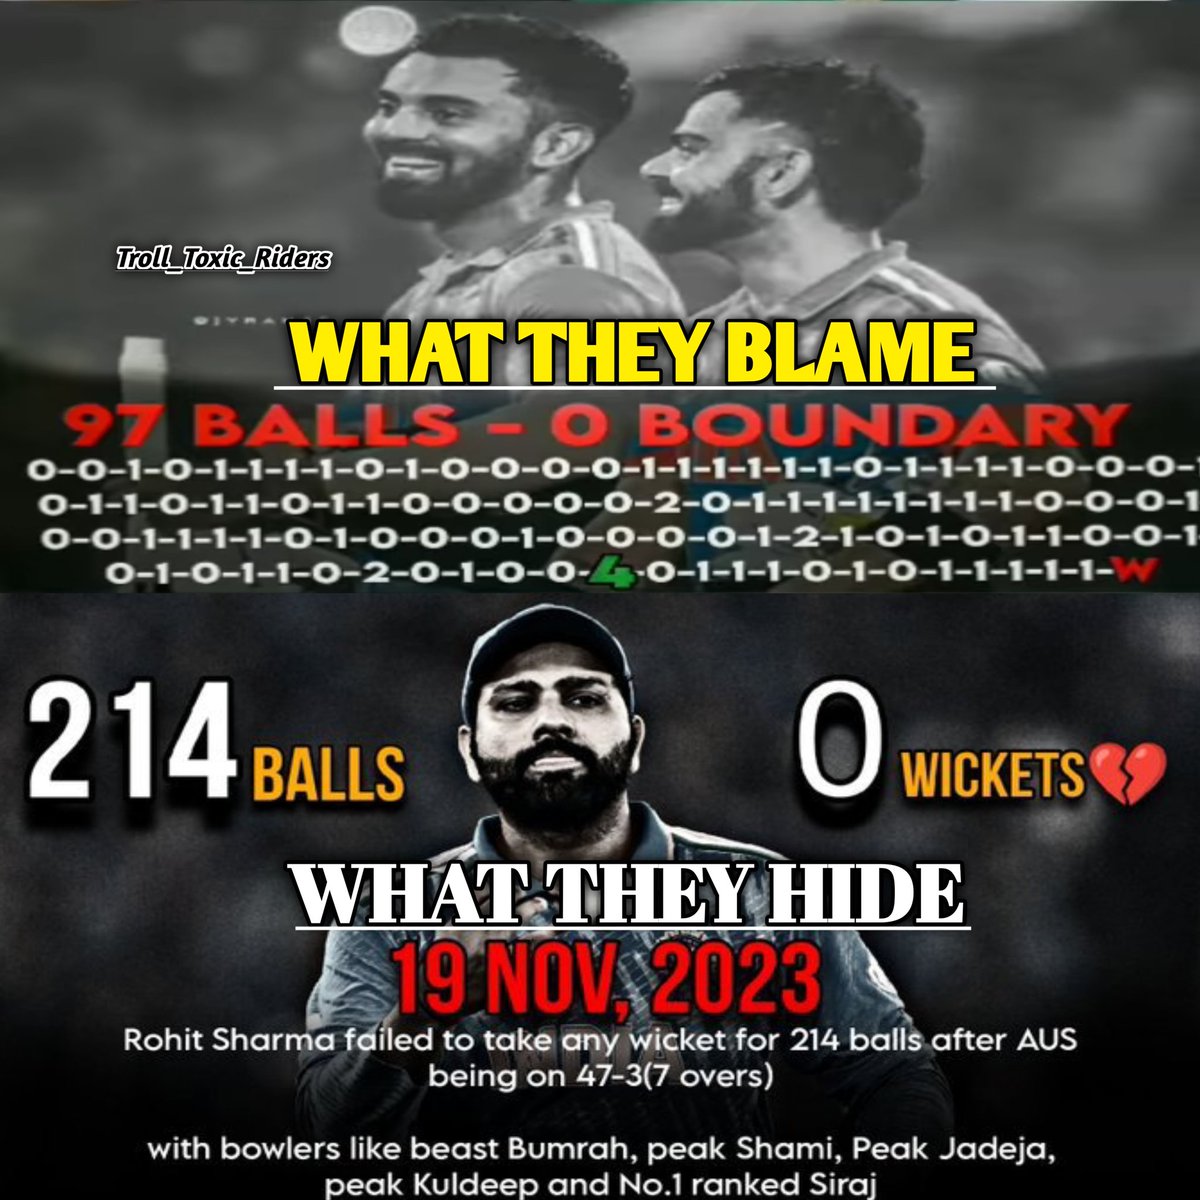 Clueless Captaincy By Vadapav But His Paid PR Never Showed This🙂💔
.
.
.
.
.
Tags⚠️
#cricketer #indiancricketteam #cricketlover #cricketfans #lovecricket #csk #rishabhpant #messi #ronaldo #rohitsharma #hardikpandya #msdhoni #cricketlovers #happybirthdaymsdhoni #bumrah #jadeja